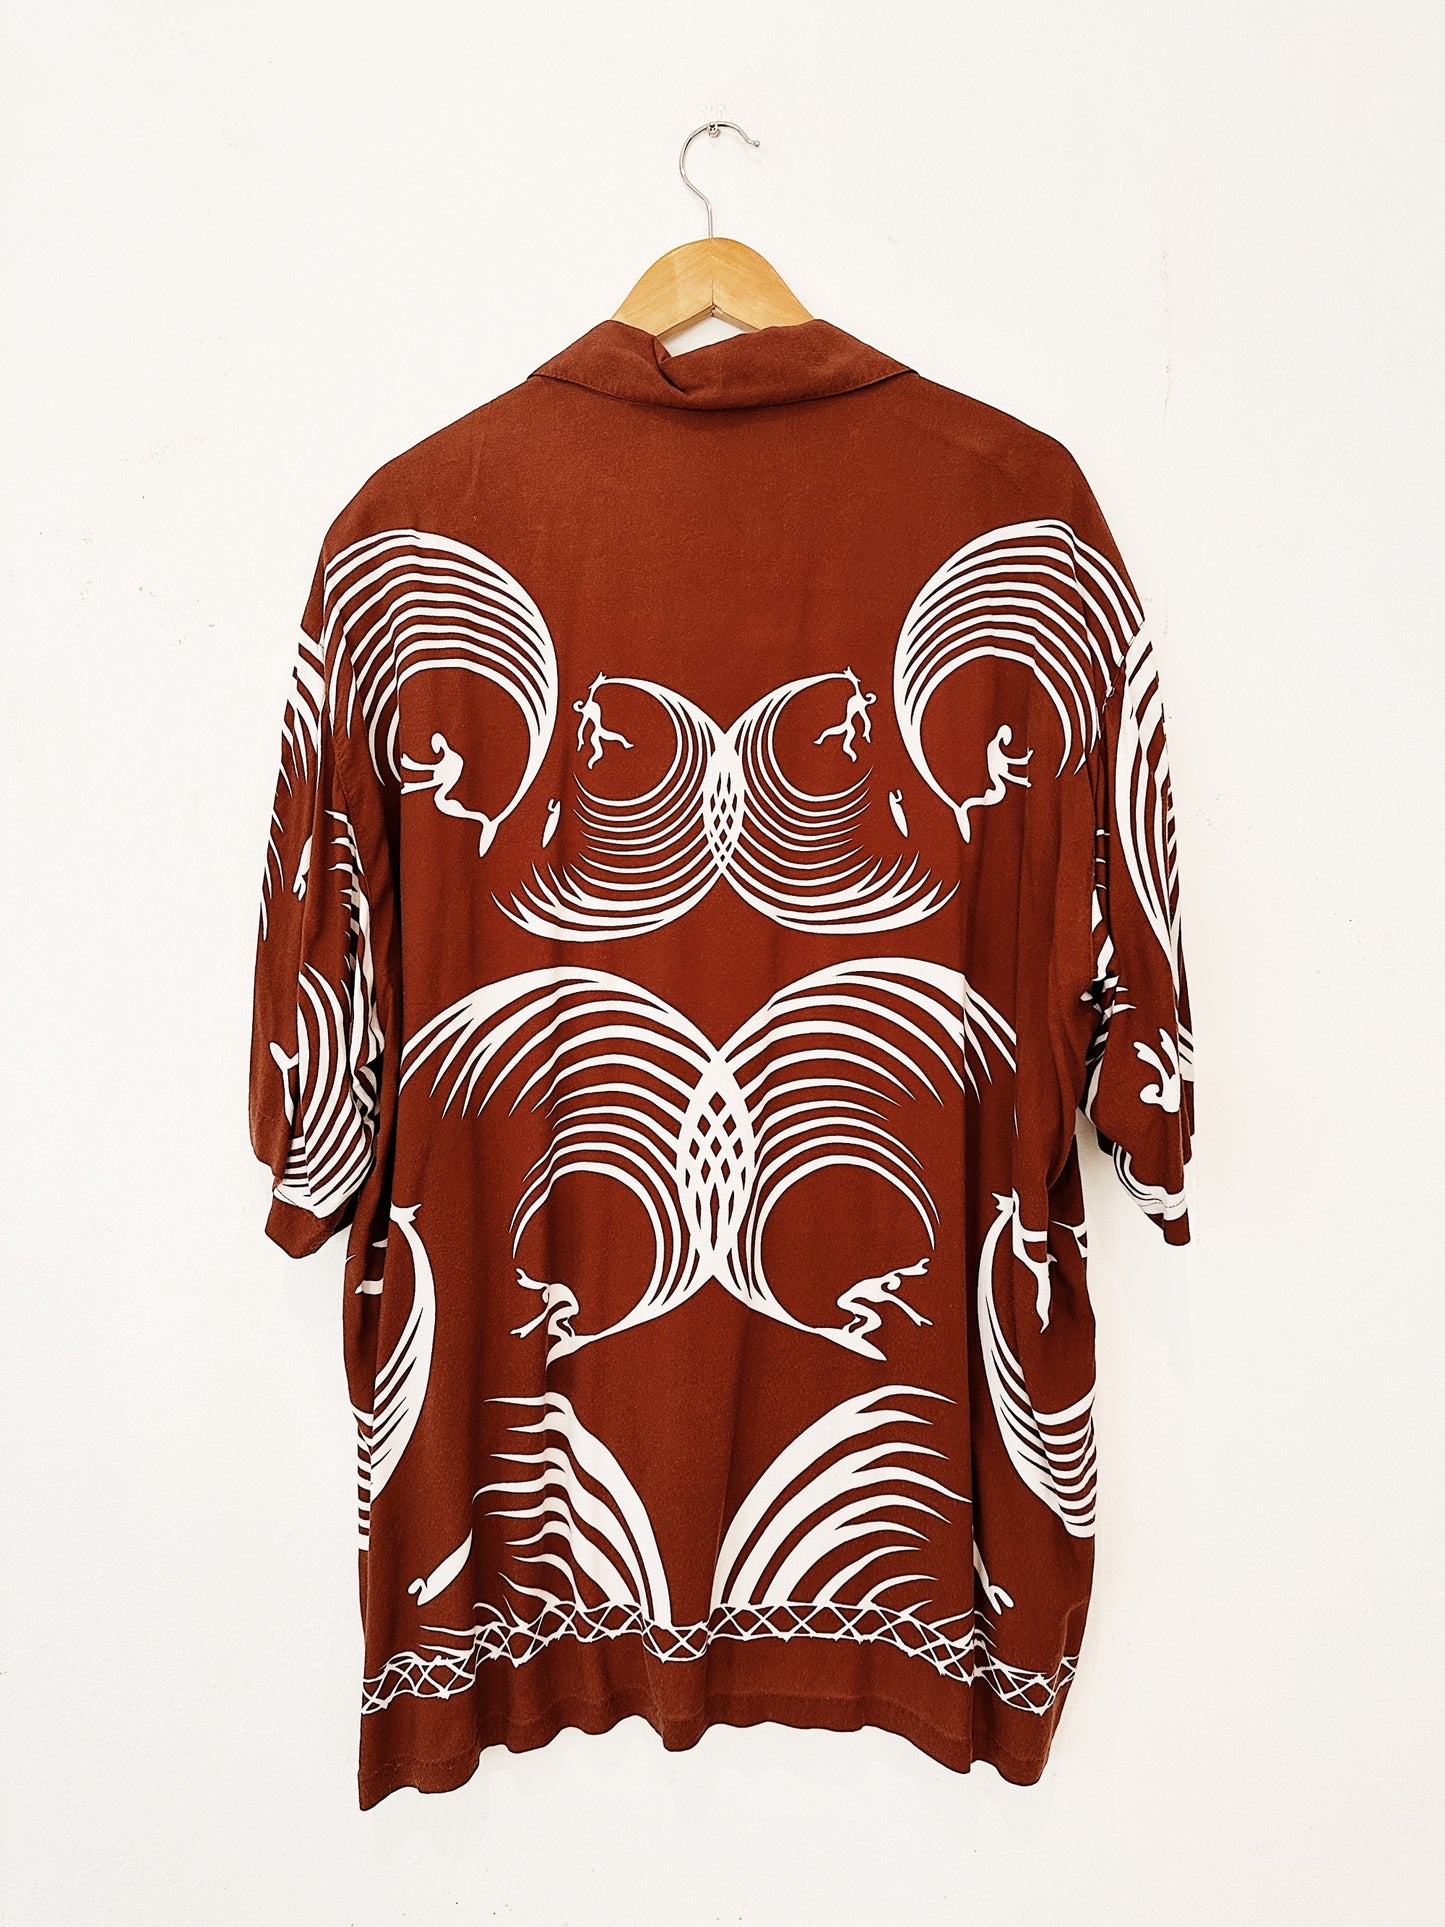 Paul McNeil "Batik Surf" Vintage Mambo Loud Shirt (Brown) 53